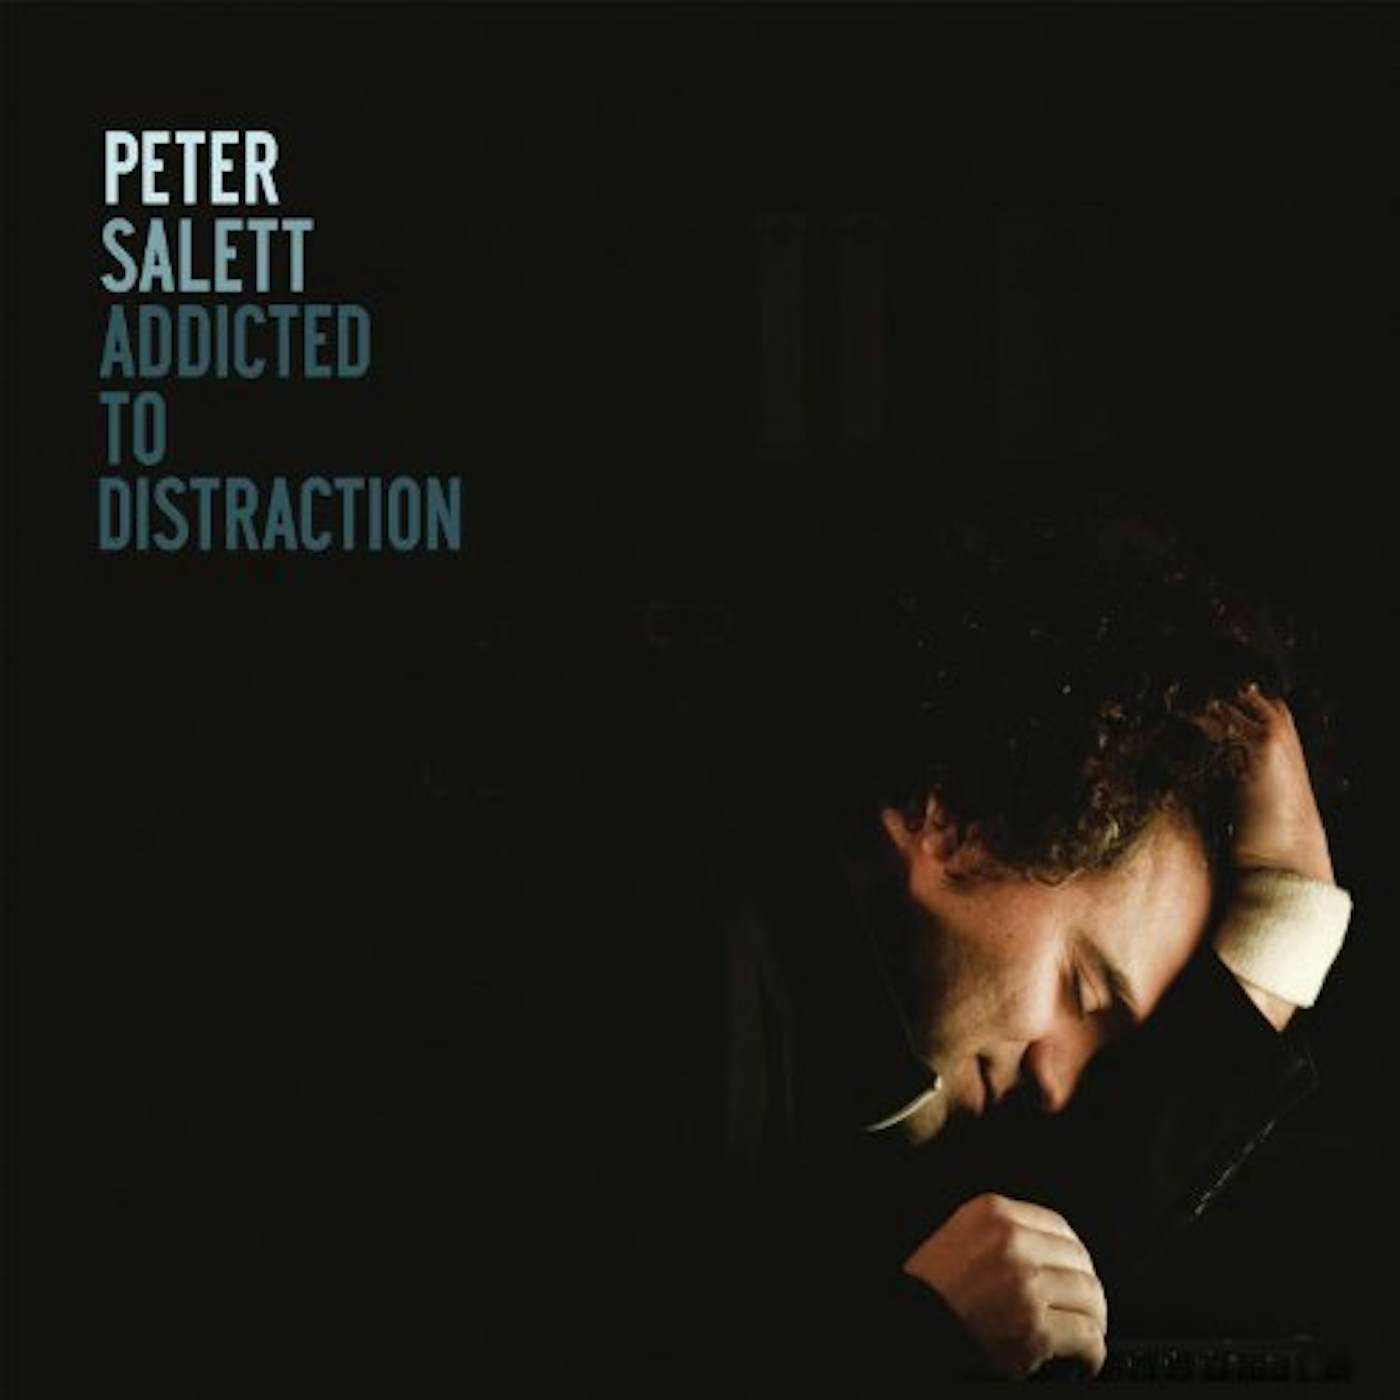 Peter Salett Addicted to Distraction Vinyl Record